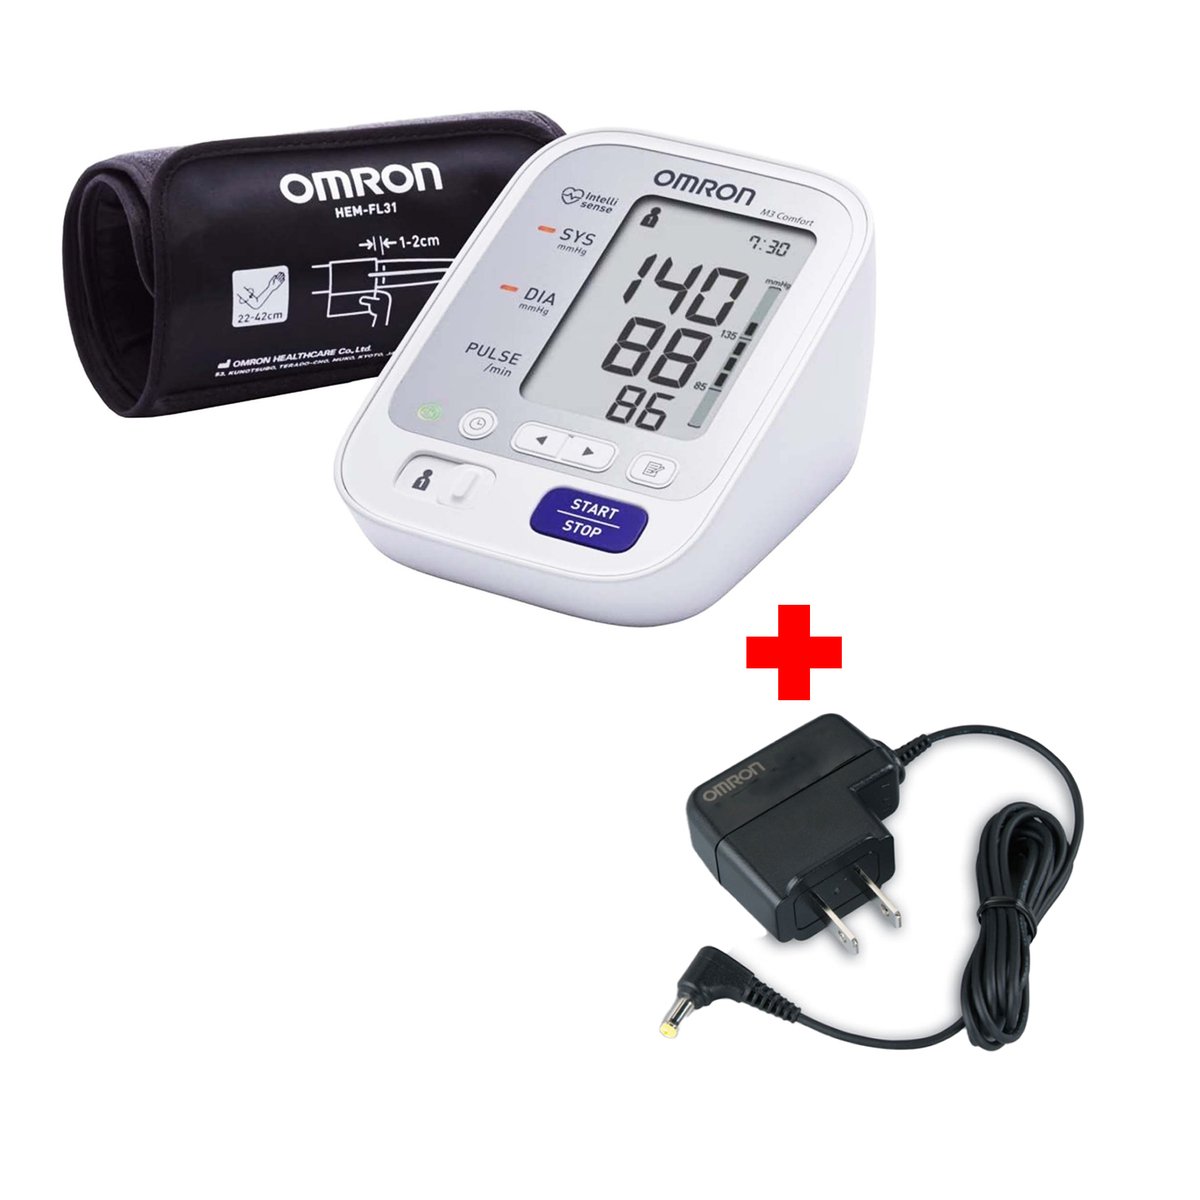 OMRON M3 Comfort + adapter upper arm blood pressure monitor , 1 pcs.